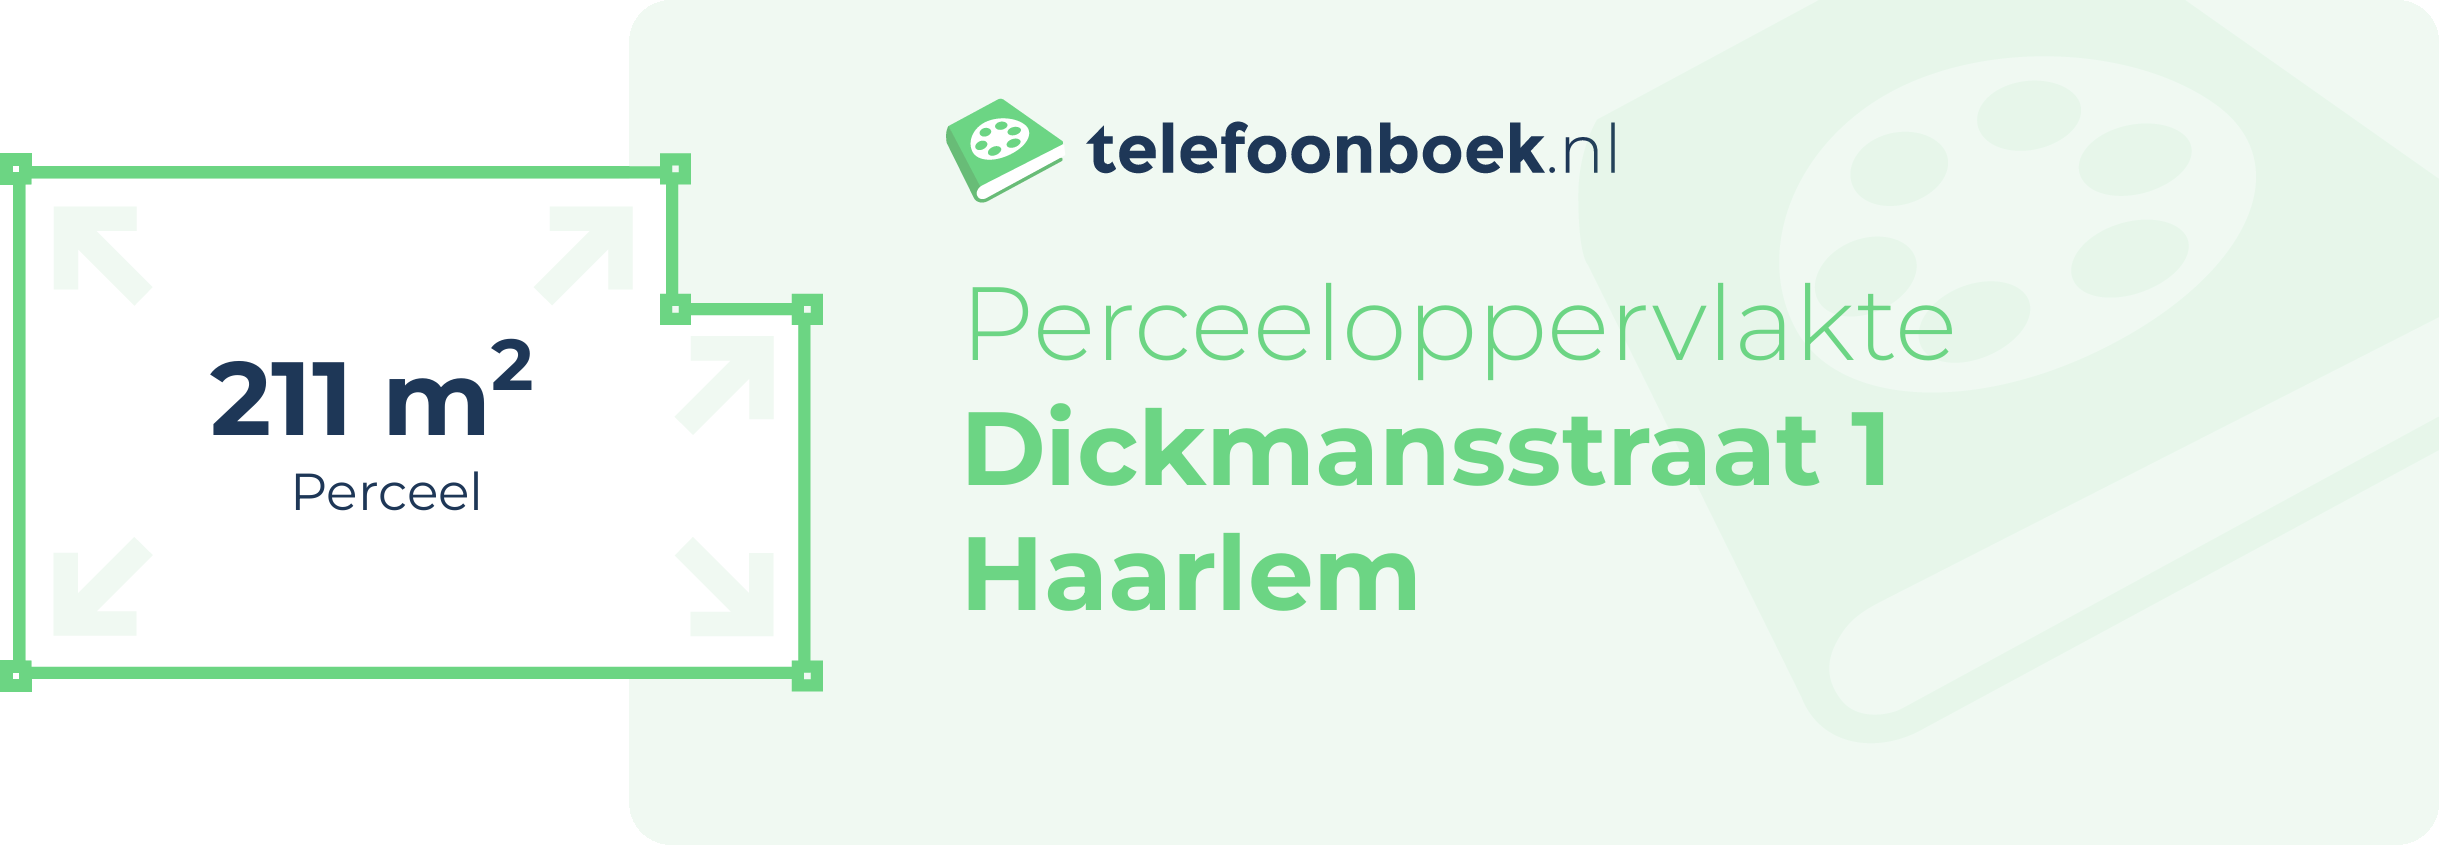 Perceeloppervlakte Dickmansstraat 1 Haarlem